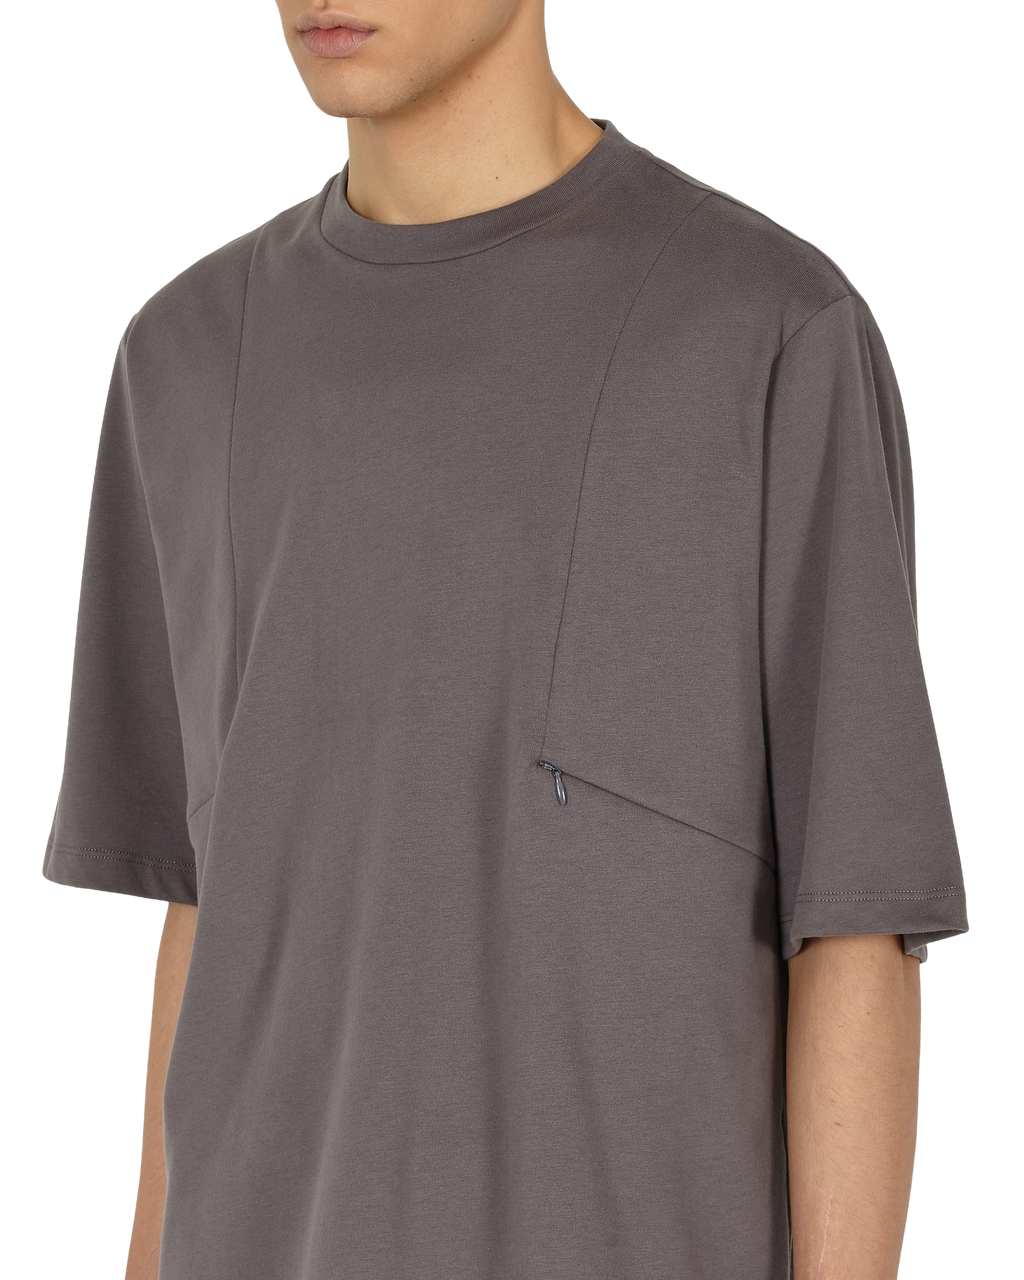 _J.L - A.L_ T-shirt Pocket J268715-S-Grey